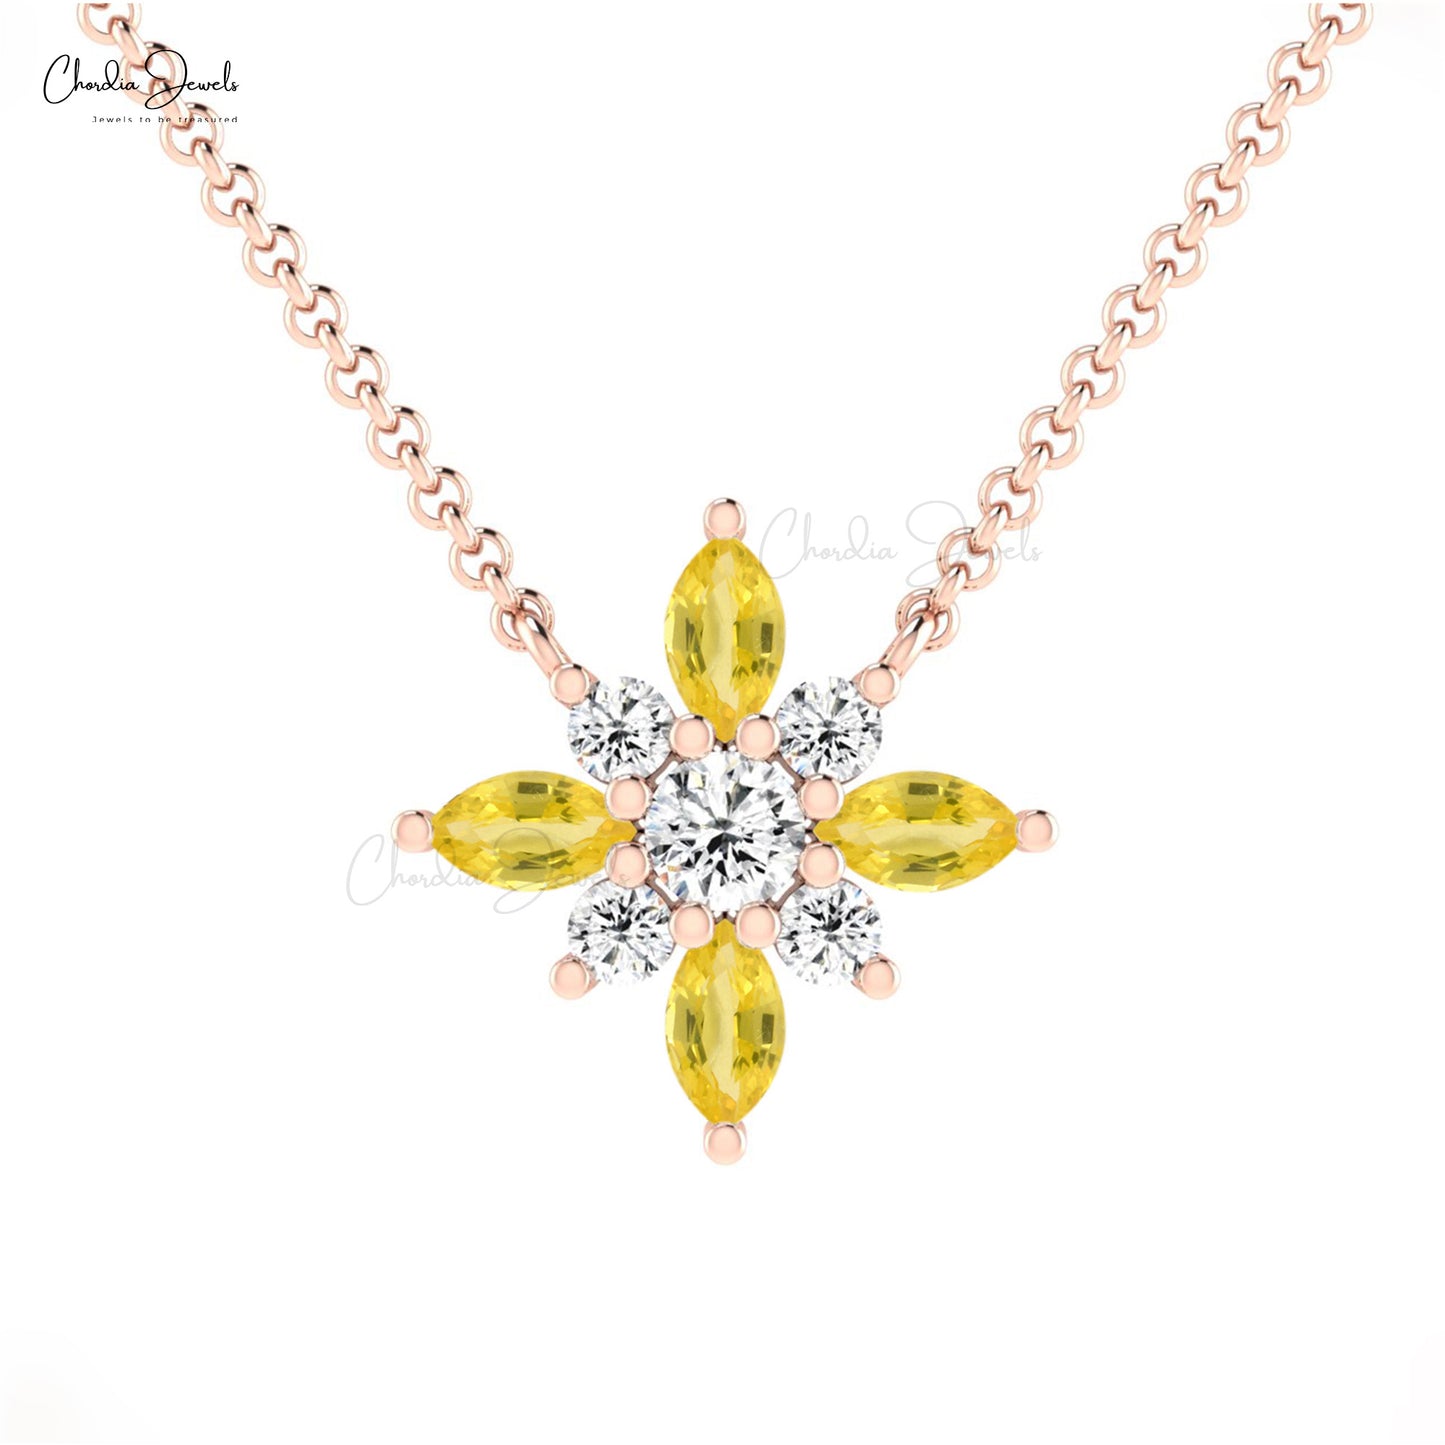 Real 14k Gold April Birhstone White Diamond Snow Flake Pendant Authentic Yellow Sapphire 0.32 Ct Marquise Cut Gemstone Pendant Hallmarked Jewelry For Gift